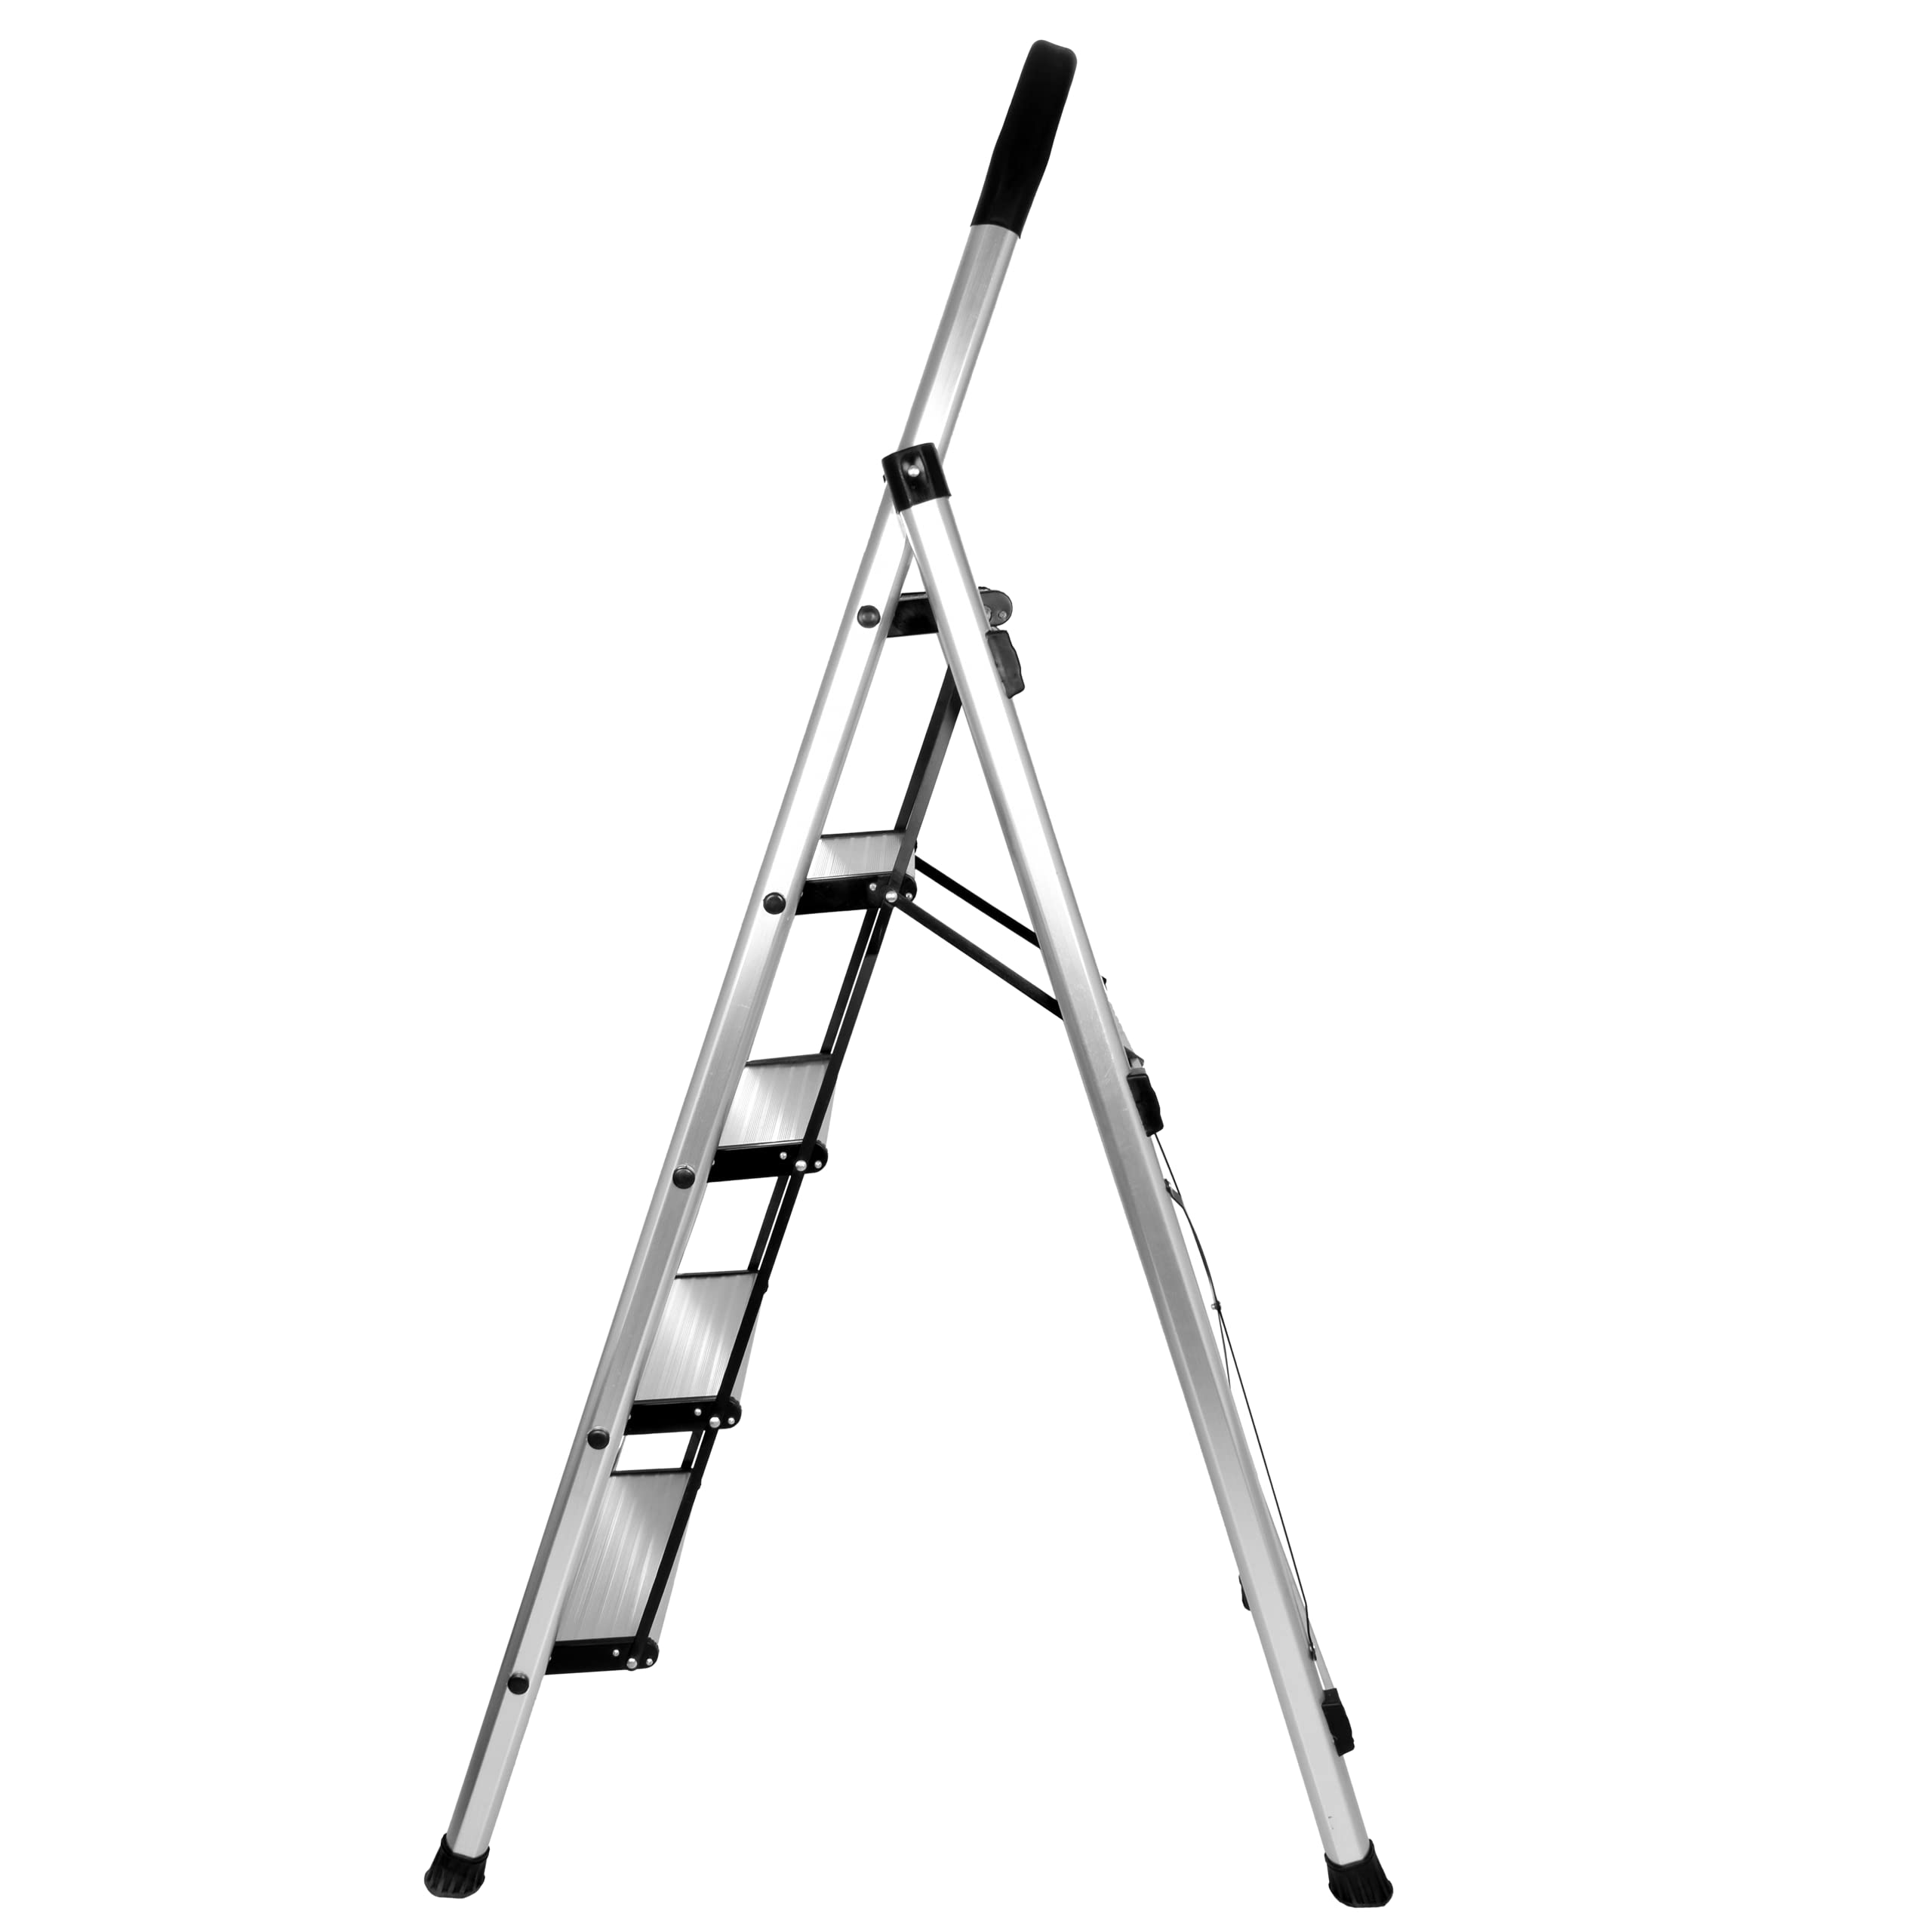 Plantex Premium Folding Aluminium Ladder for Home Use/Wide Anti Skid Step Ladder(Anodize-Silver) (Aluminum, 5 Step)